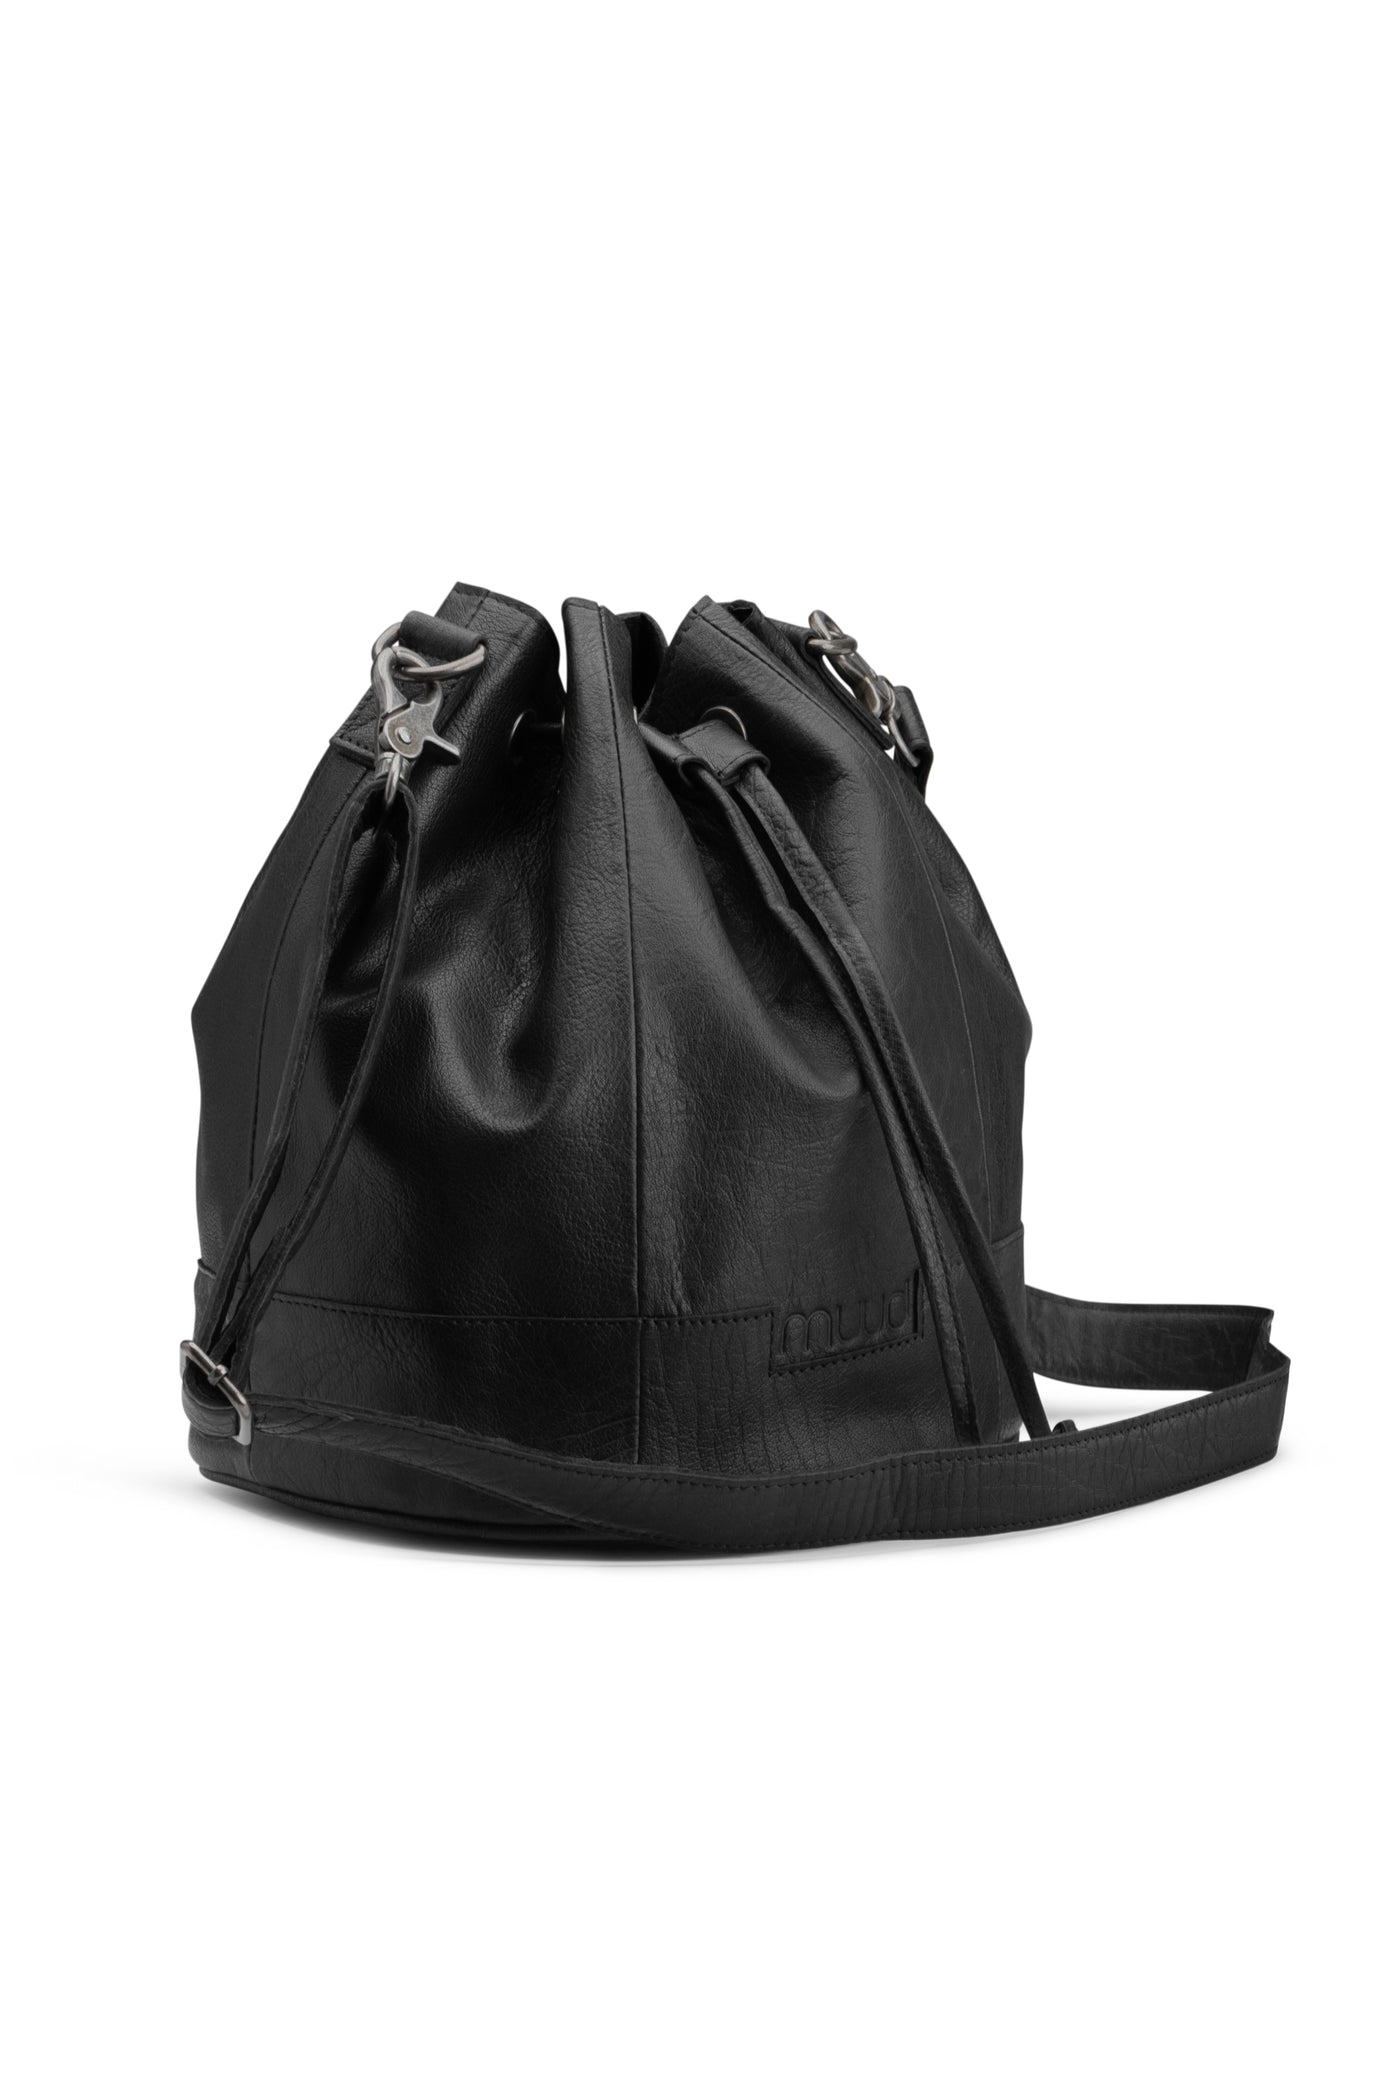 Urbancode Leather Suede Mix Shoulder Bag In Black | ModeSens